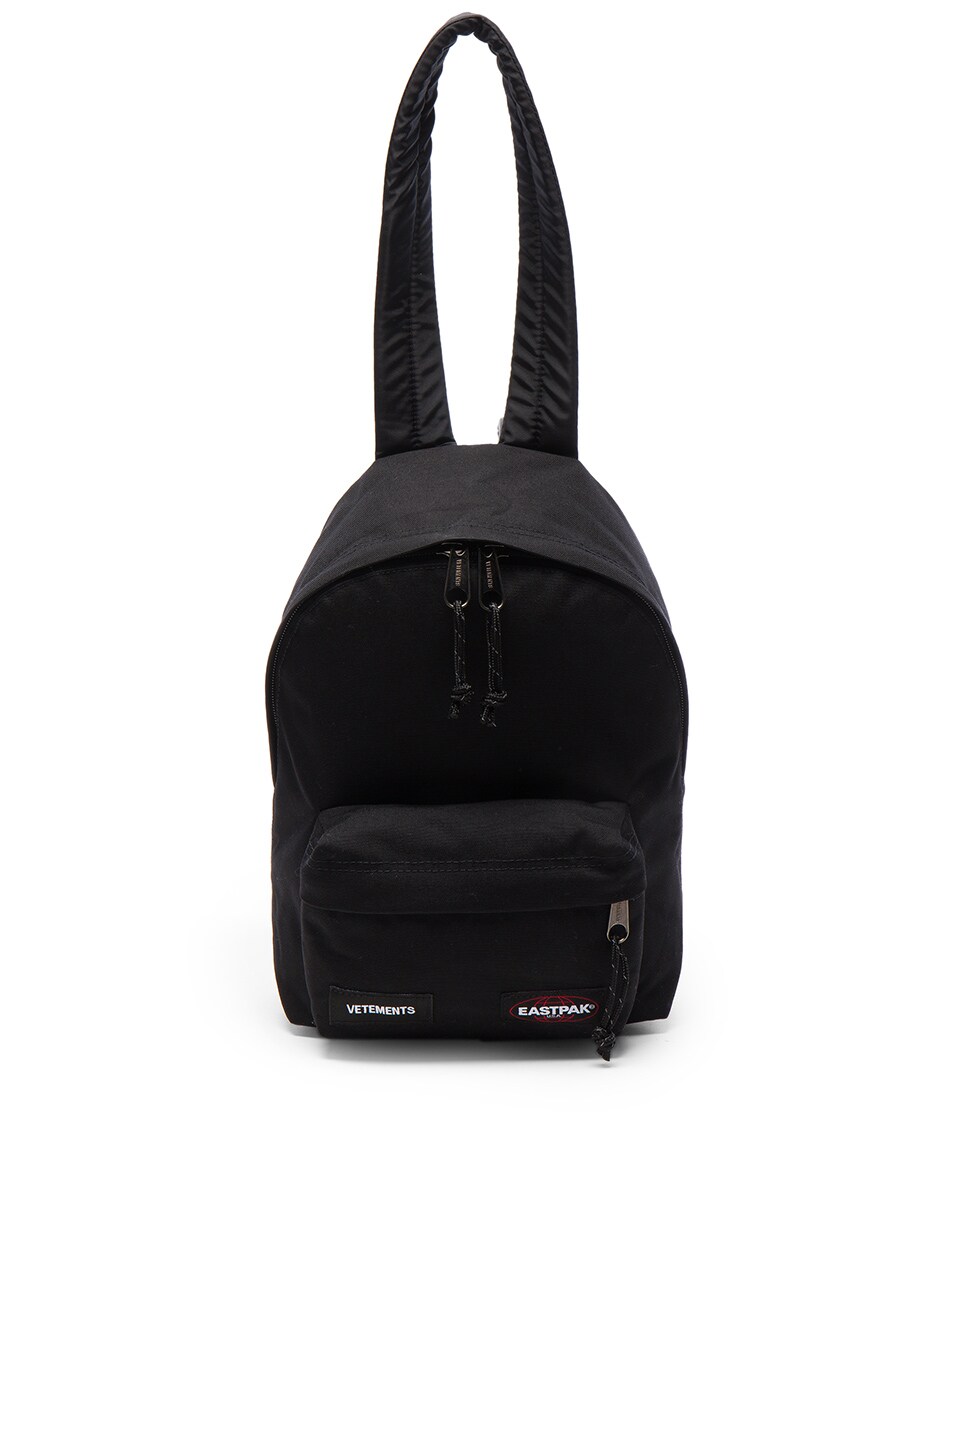 VETEMENTS x Eastpak Mini Backpack in Black | FWRD